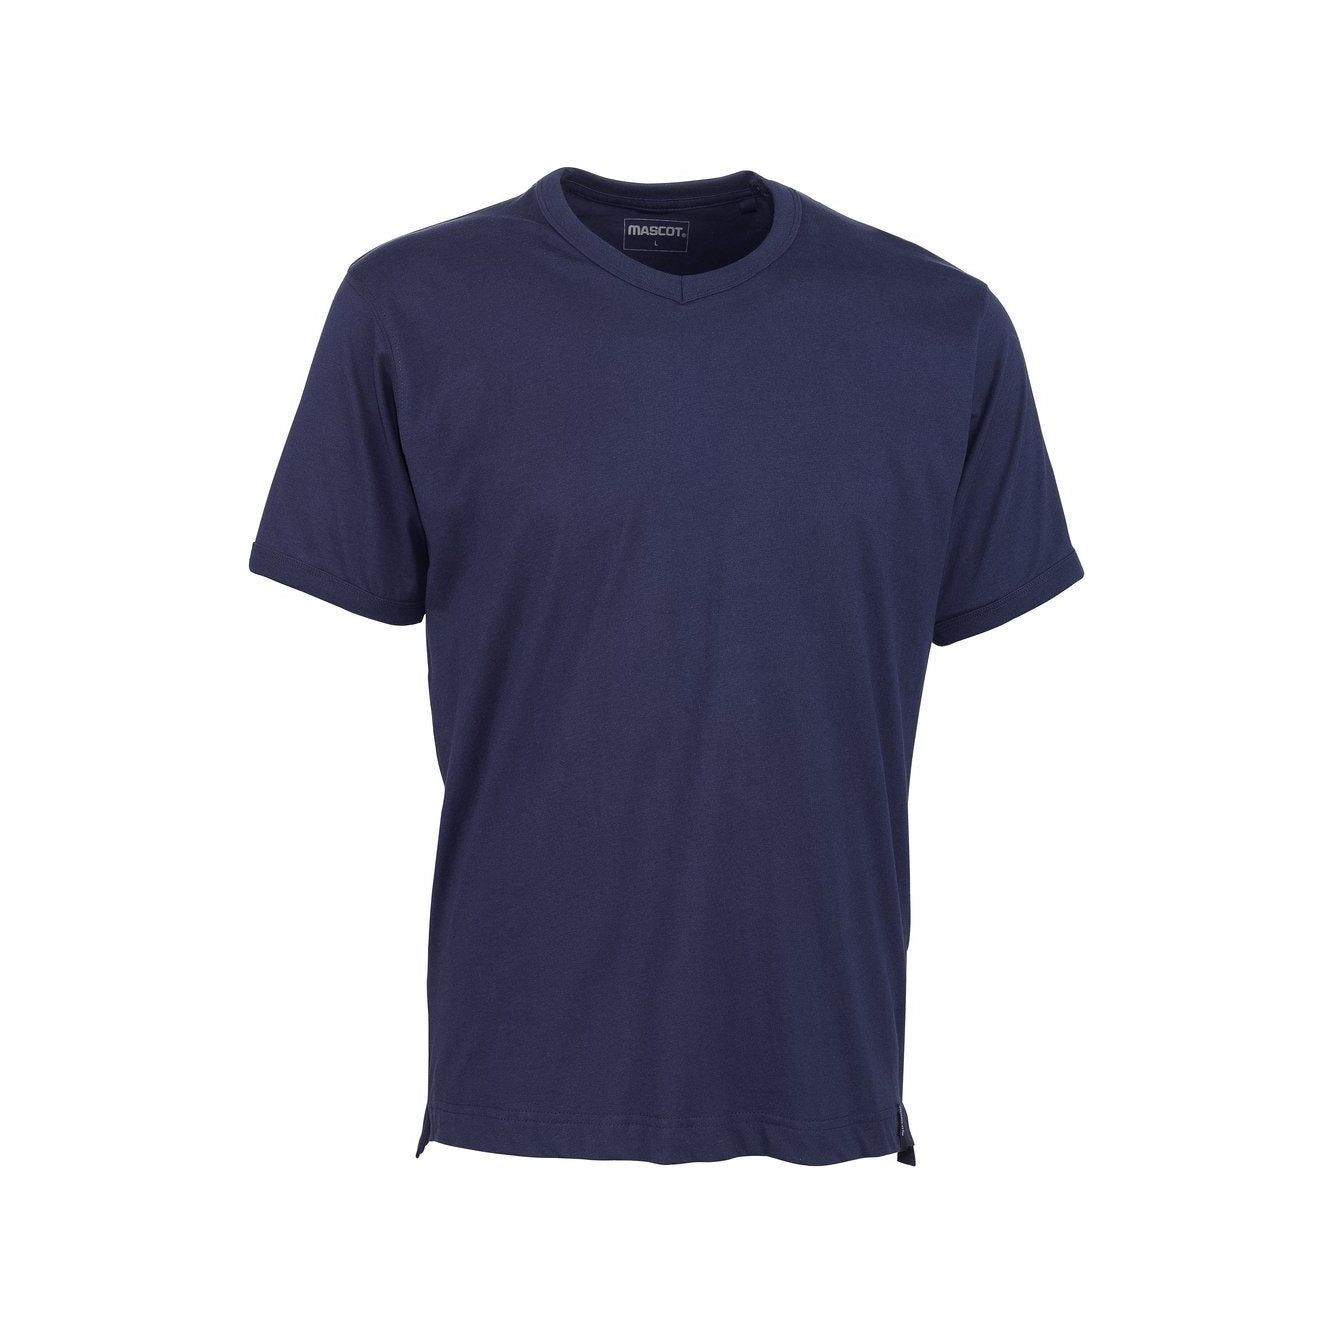 Mascot Algoso T-shirt V-Neck Navy Blue 50415-250-01 Front